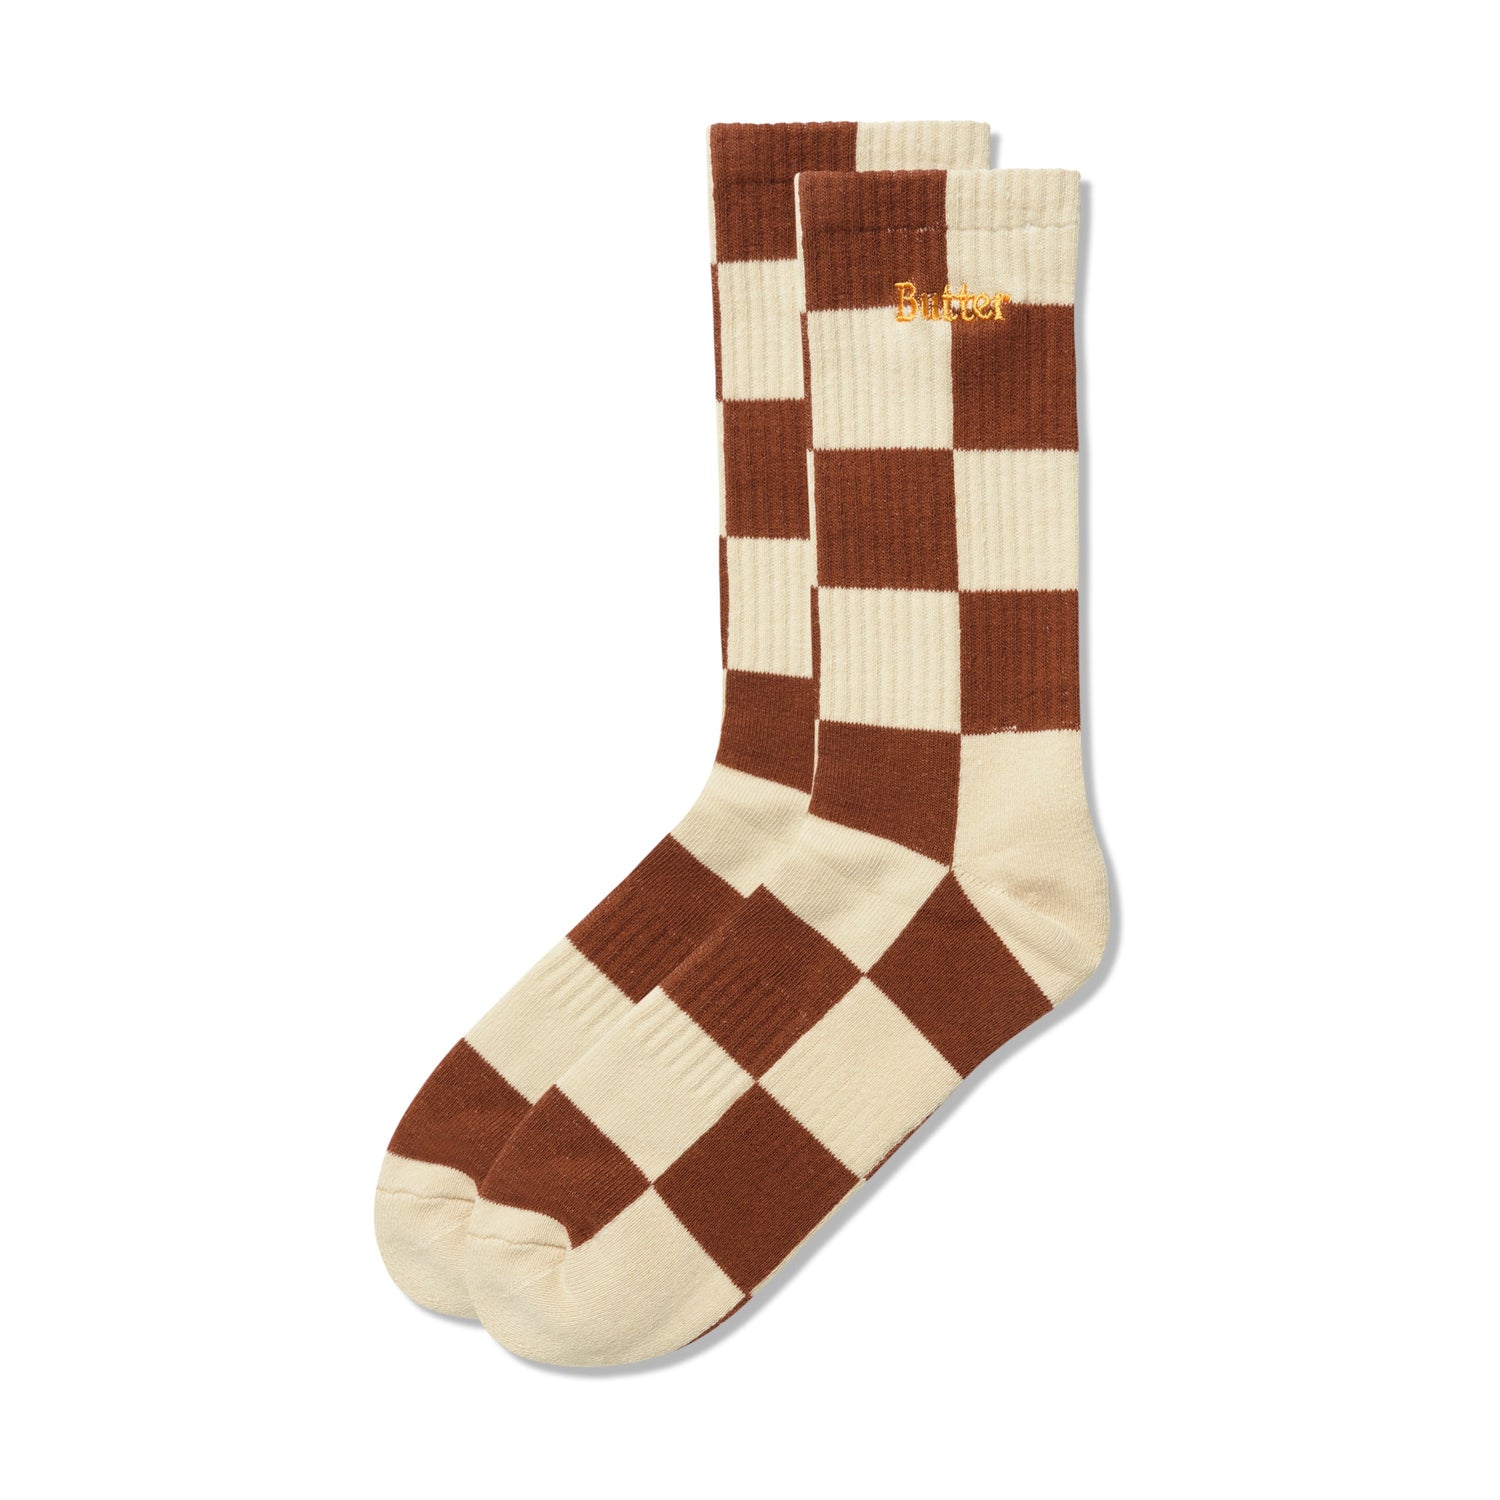 Checkered Socks, Redwood / Tan